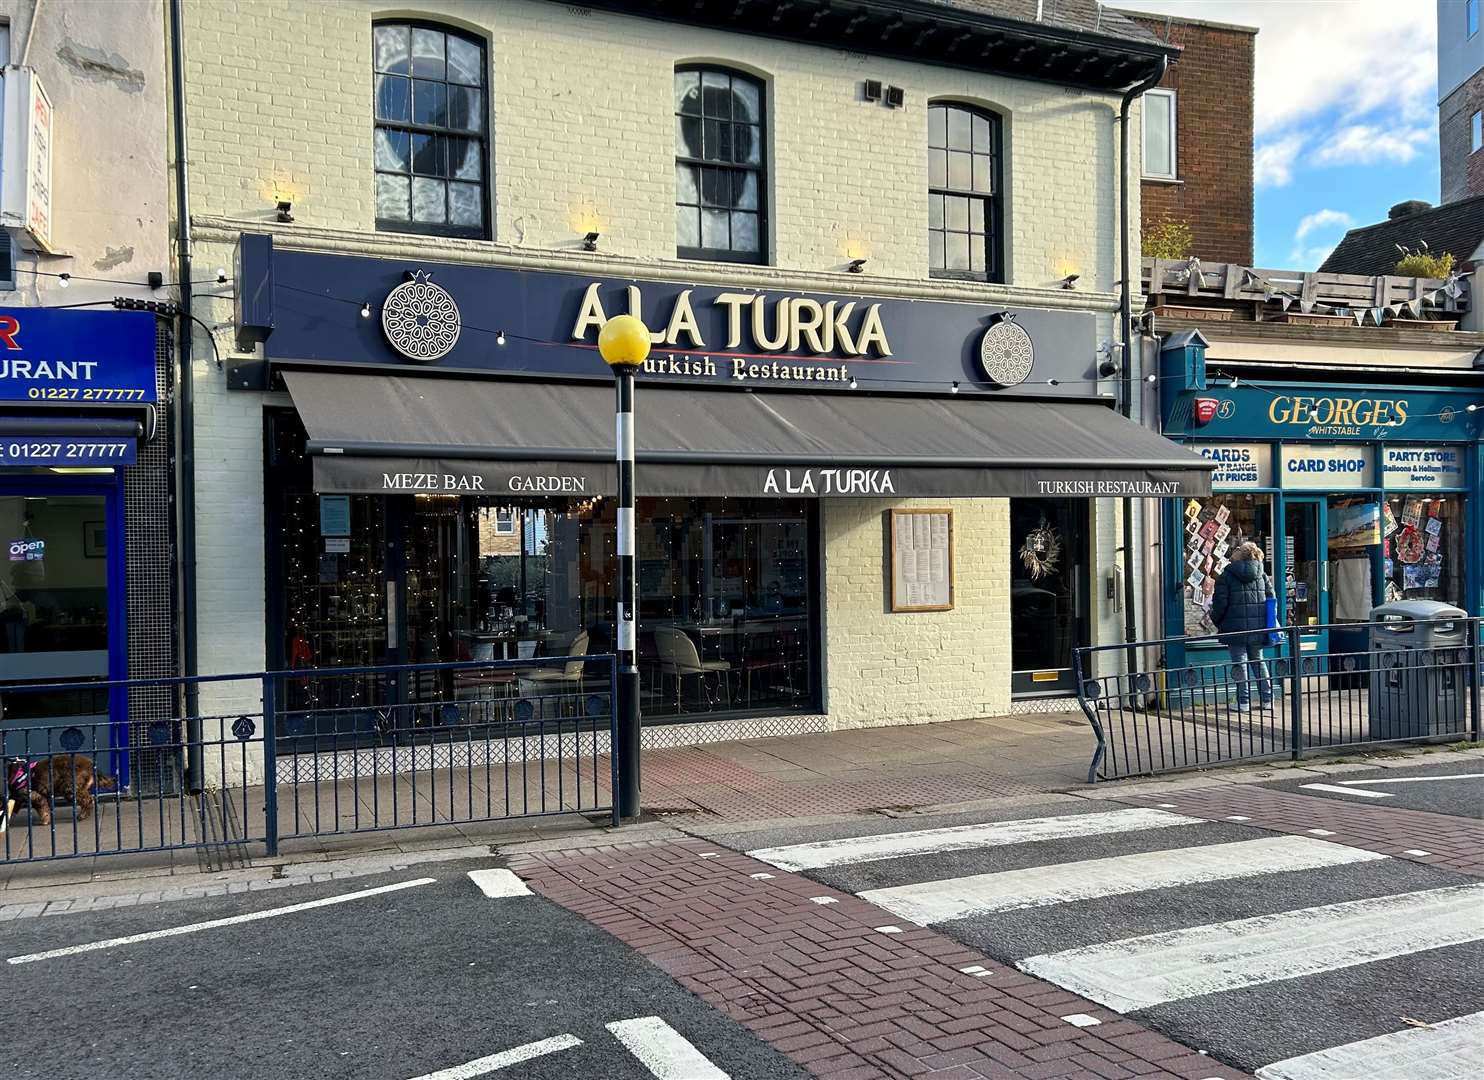 A La Turka in Whitstable high street opened last year